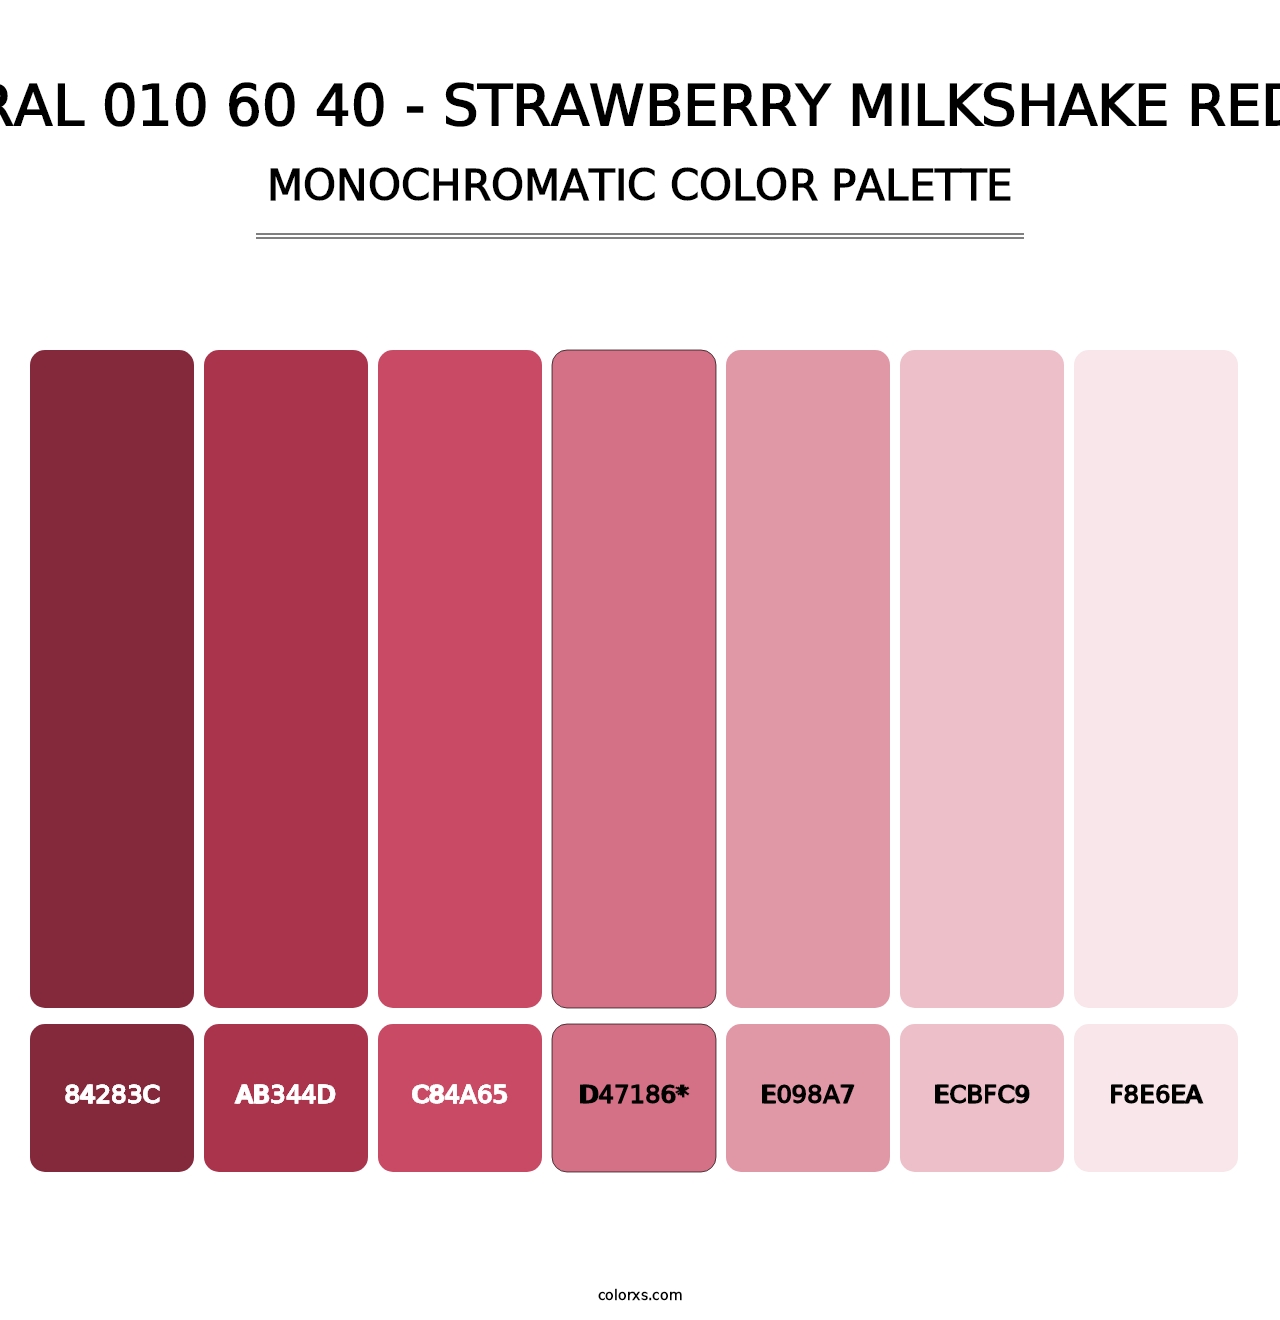 RAL 010 60 40 - Strawberry Milkshake Red - Monochromatic Color Palette